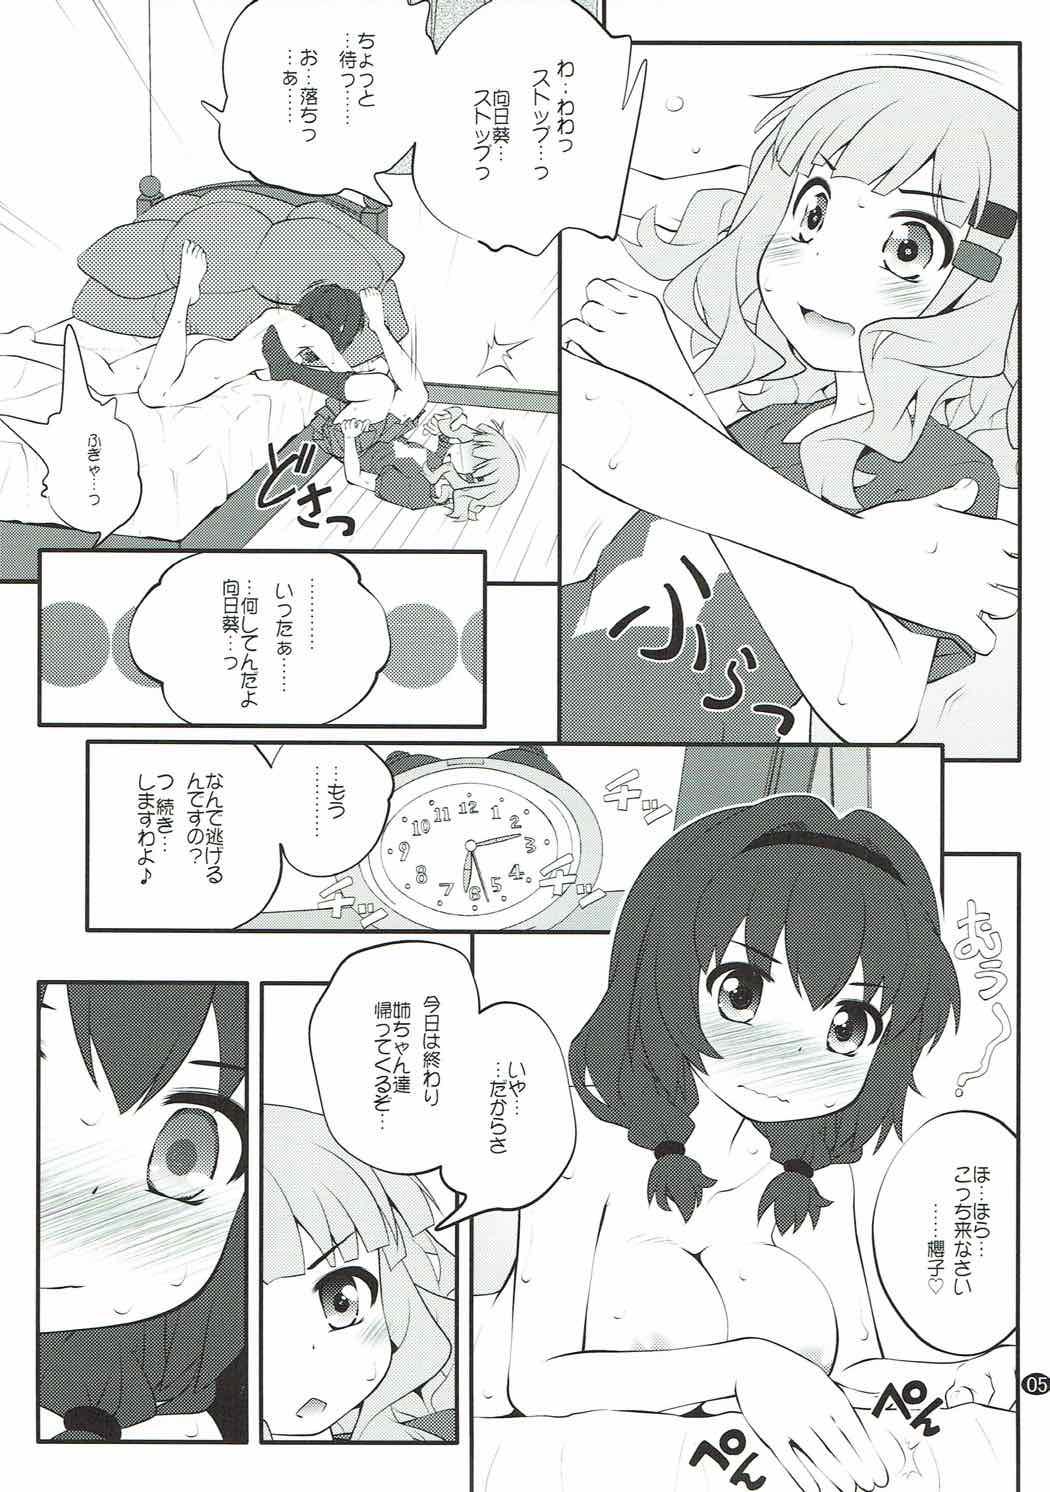 Nut Himegoto Flowers 11 - Yuruyuri Joi - Page 4